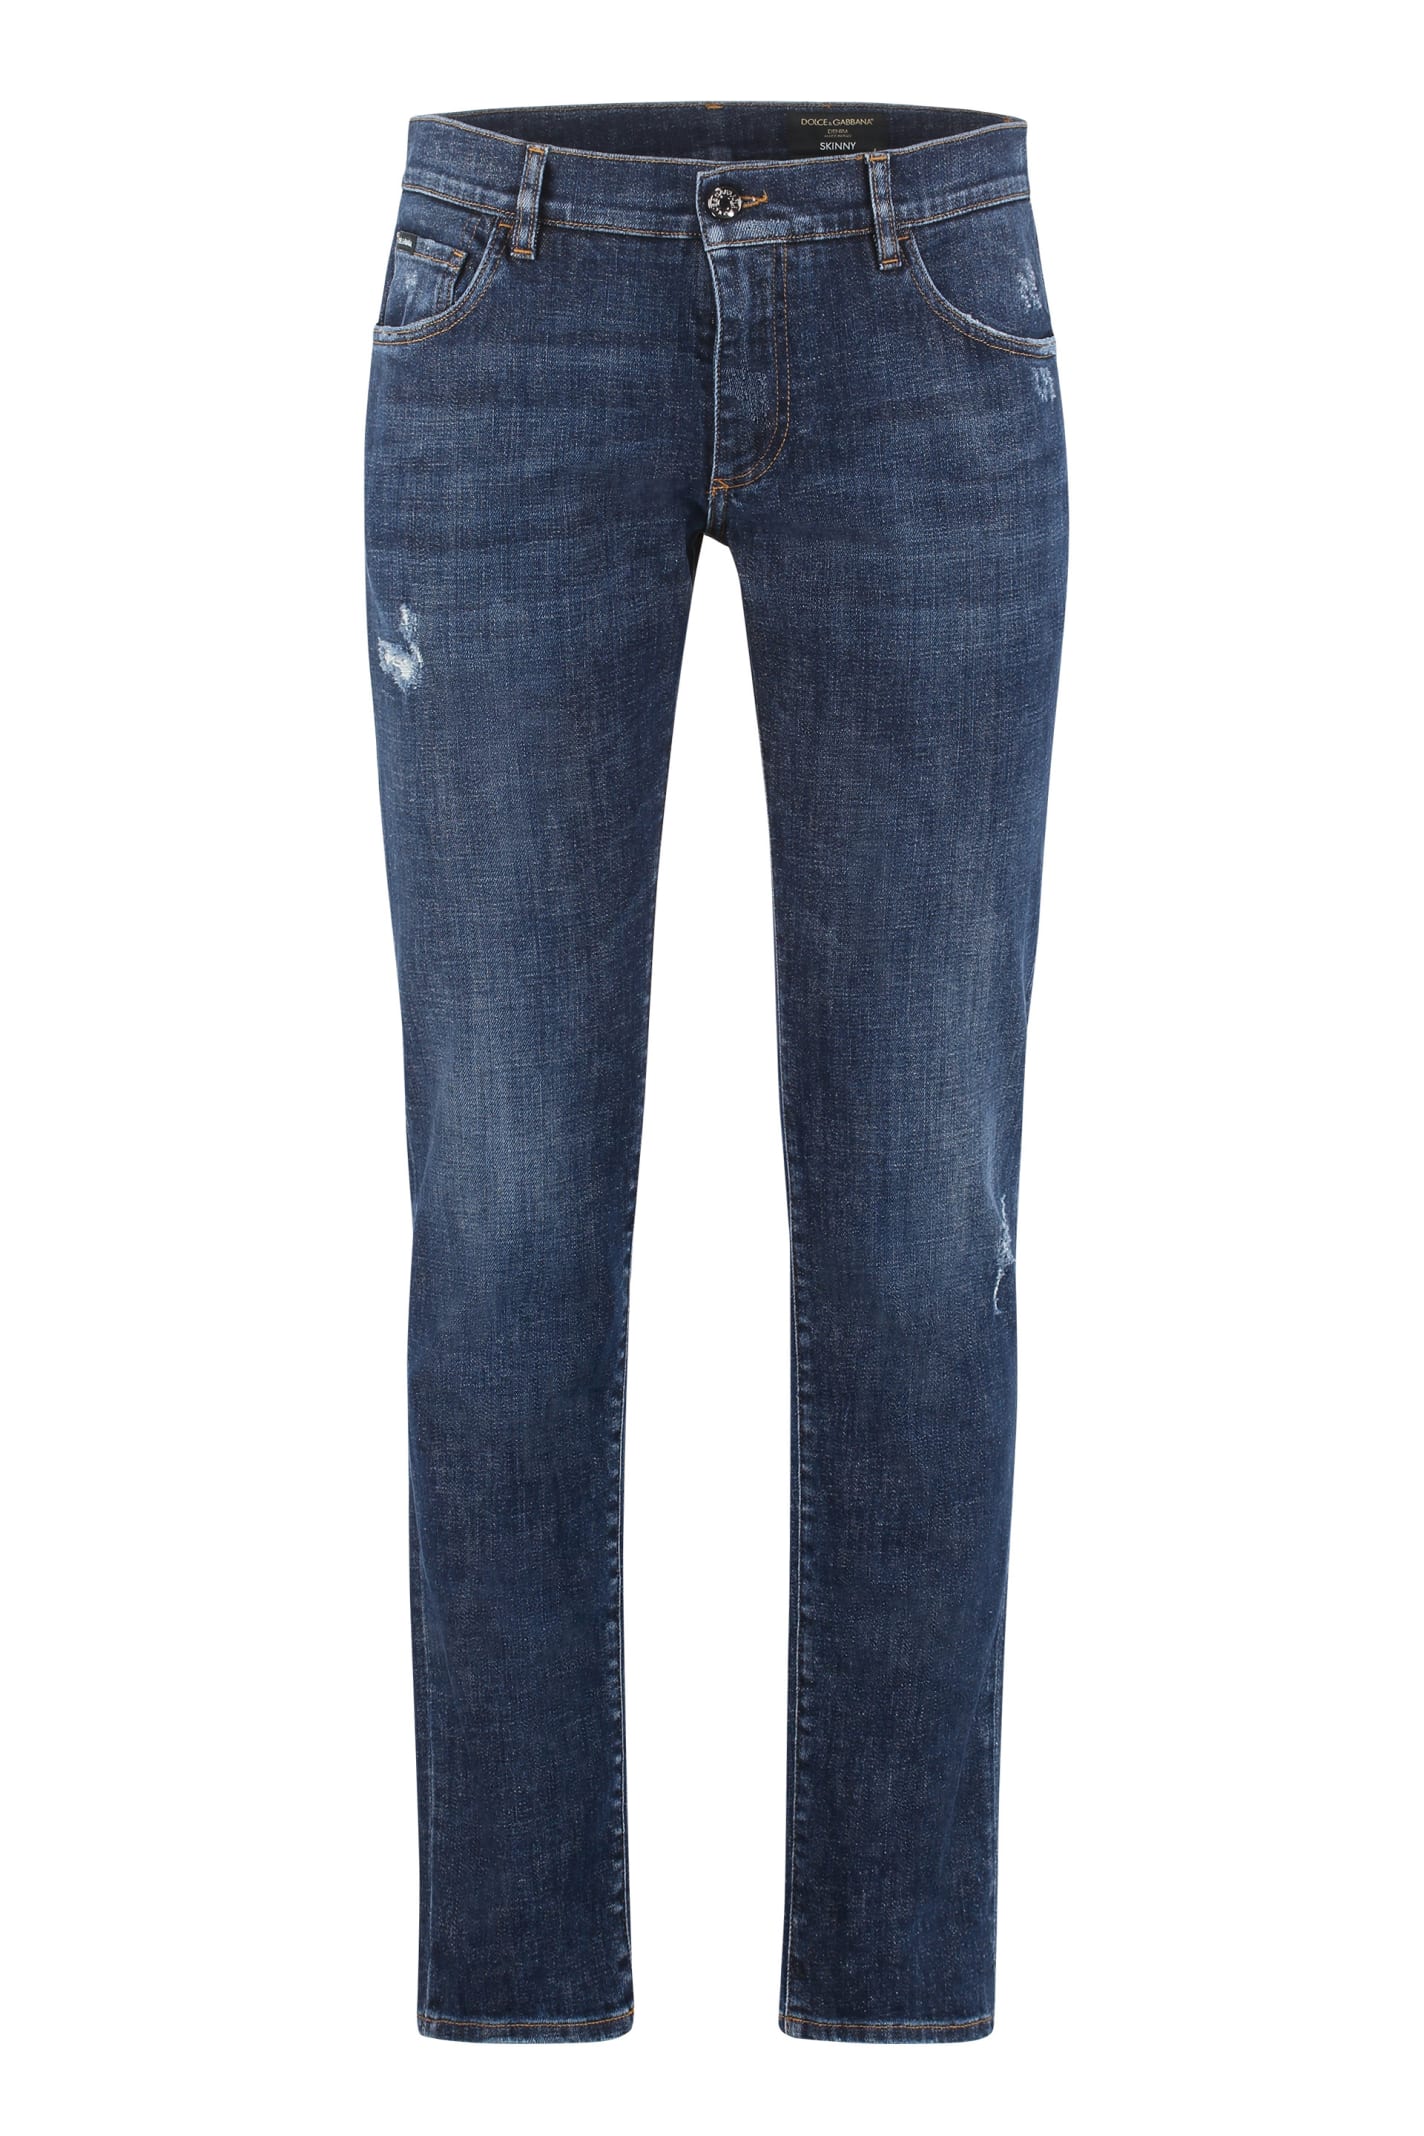 Dolce & Gabbana 5-pocket Skinny Jeans